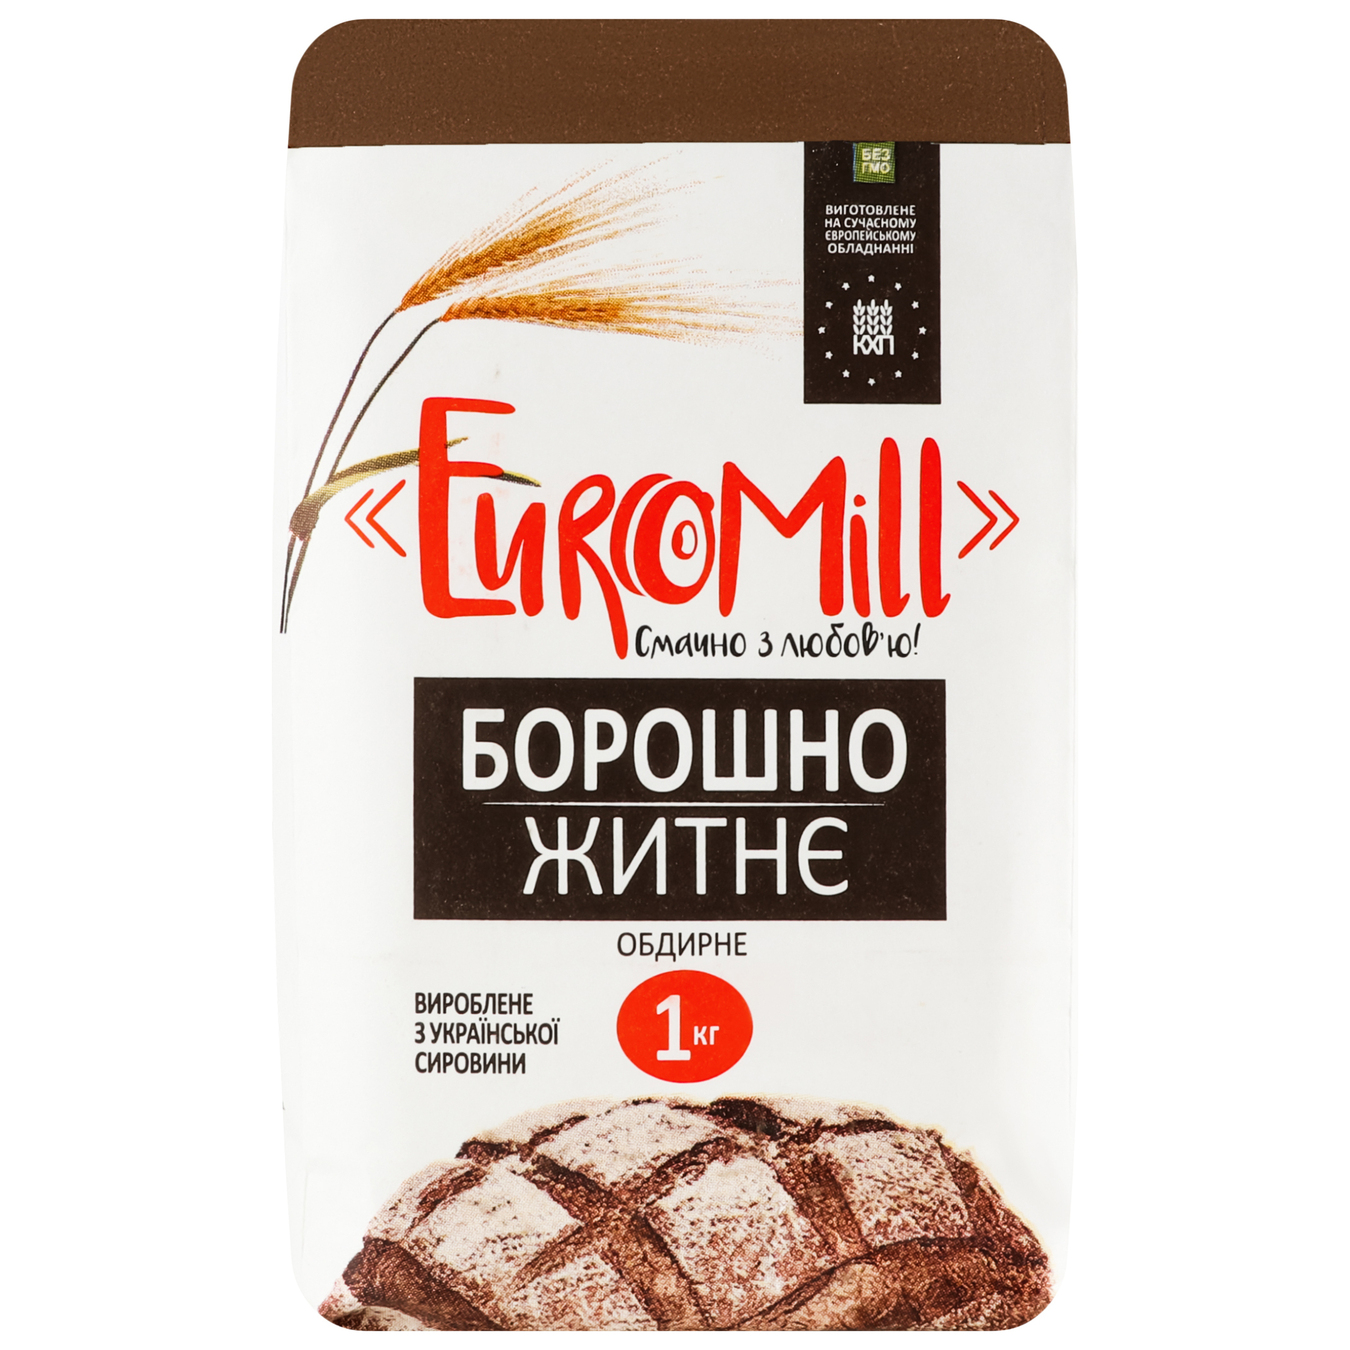 EuroMill rye flour 1 kg 5